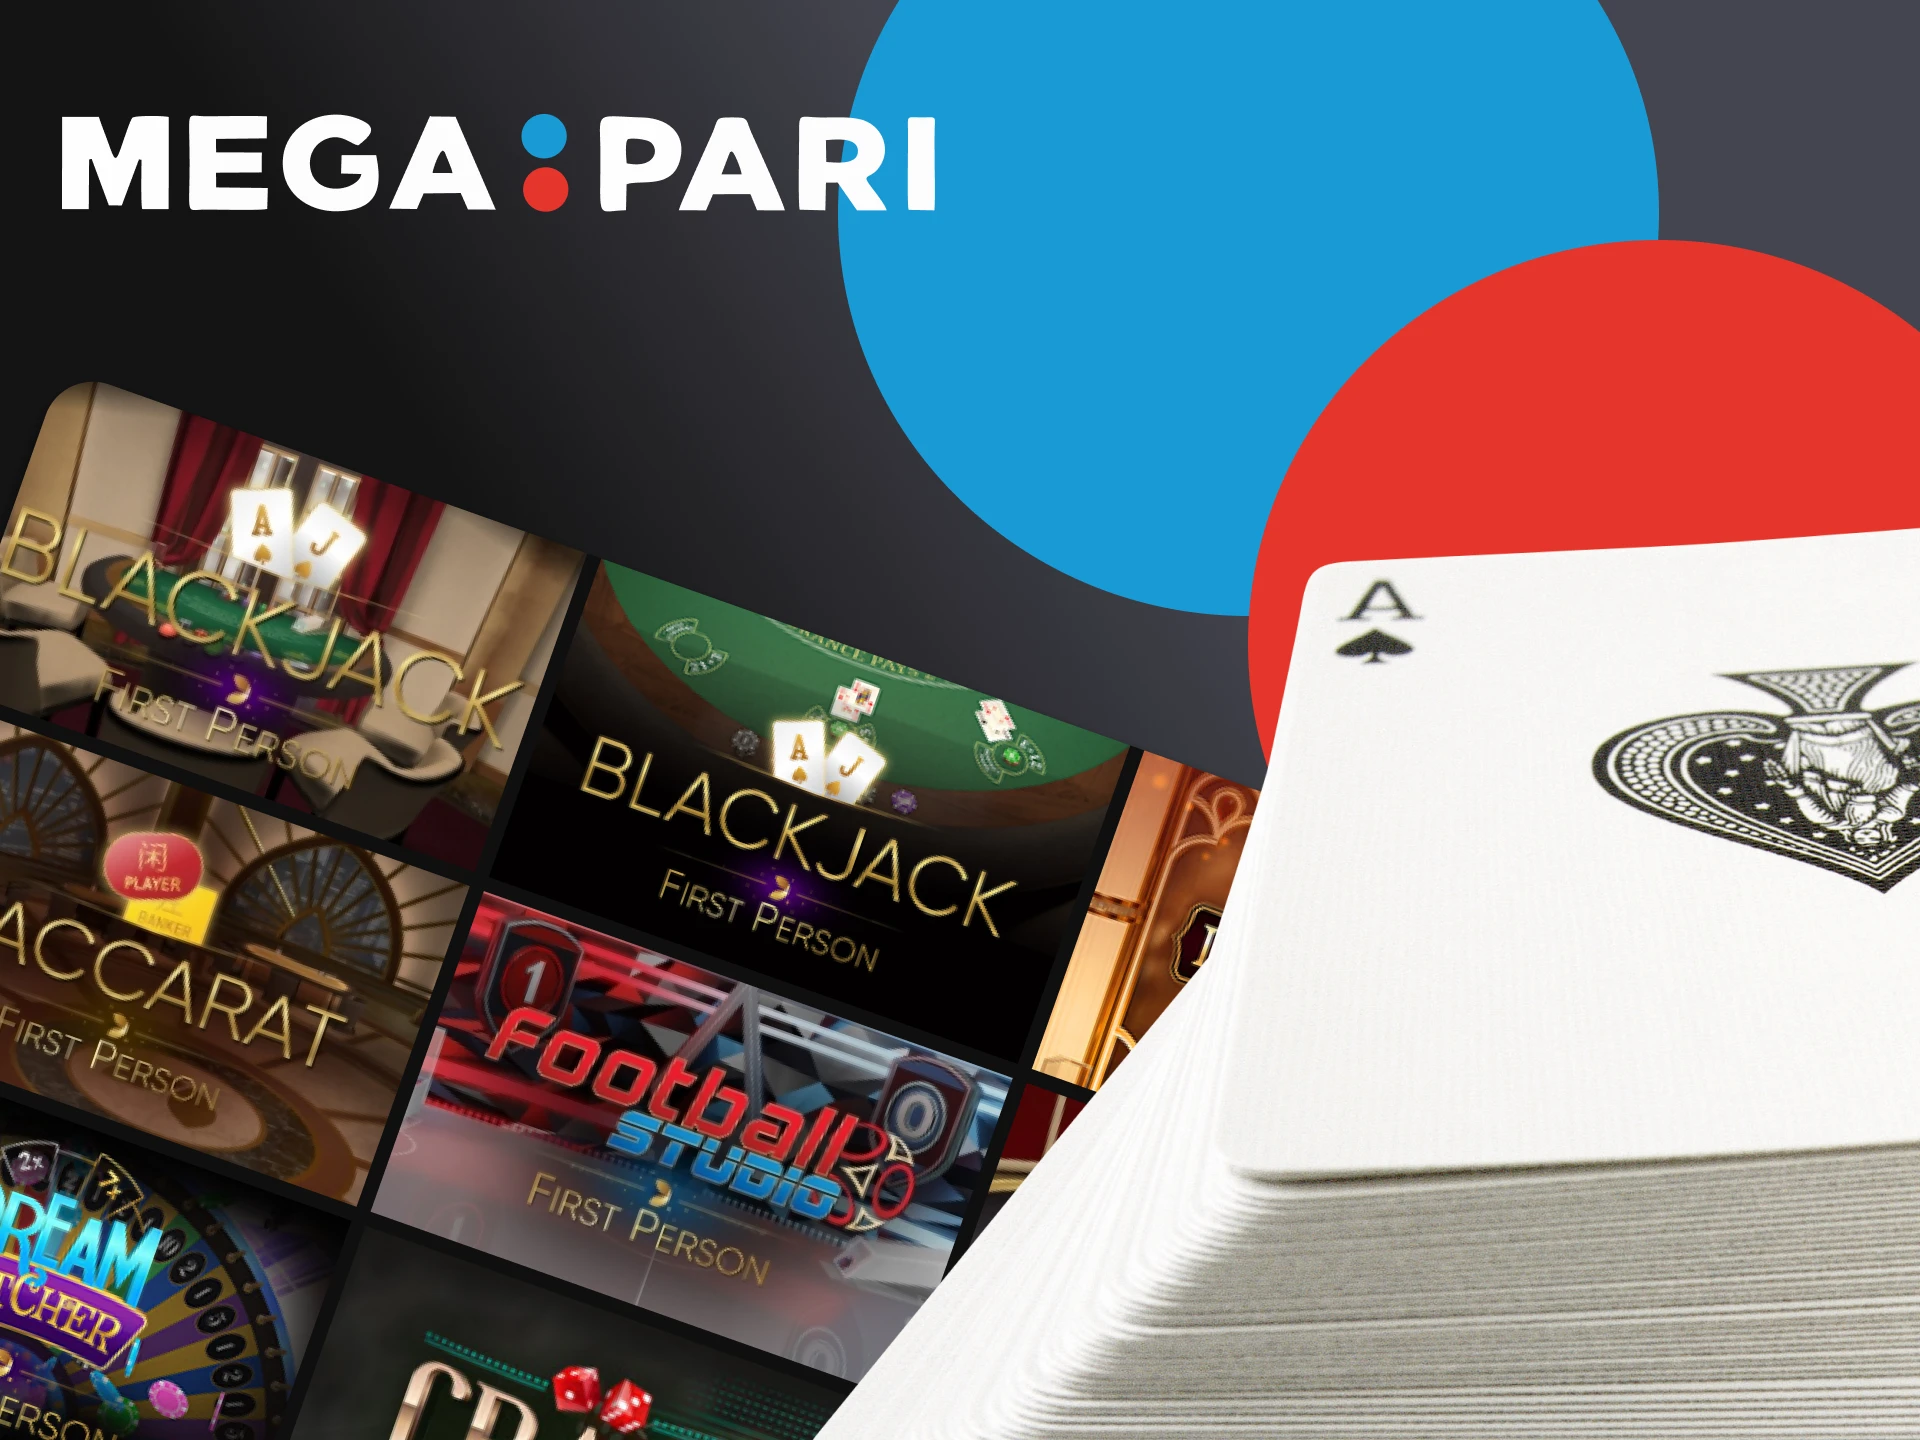 For casino games at Megapari, choose Table Games.